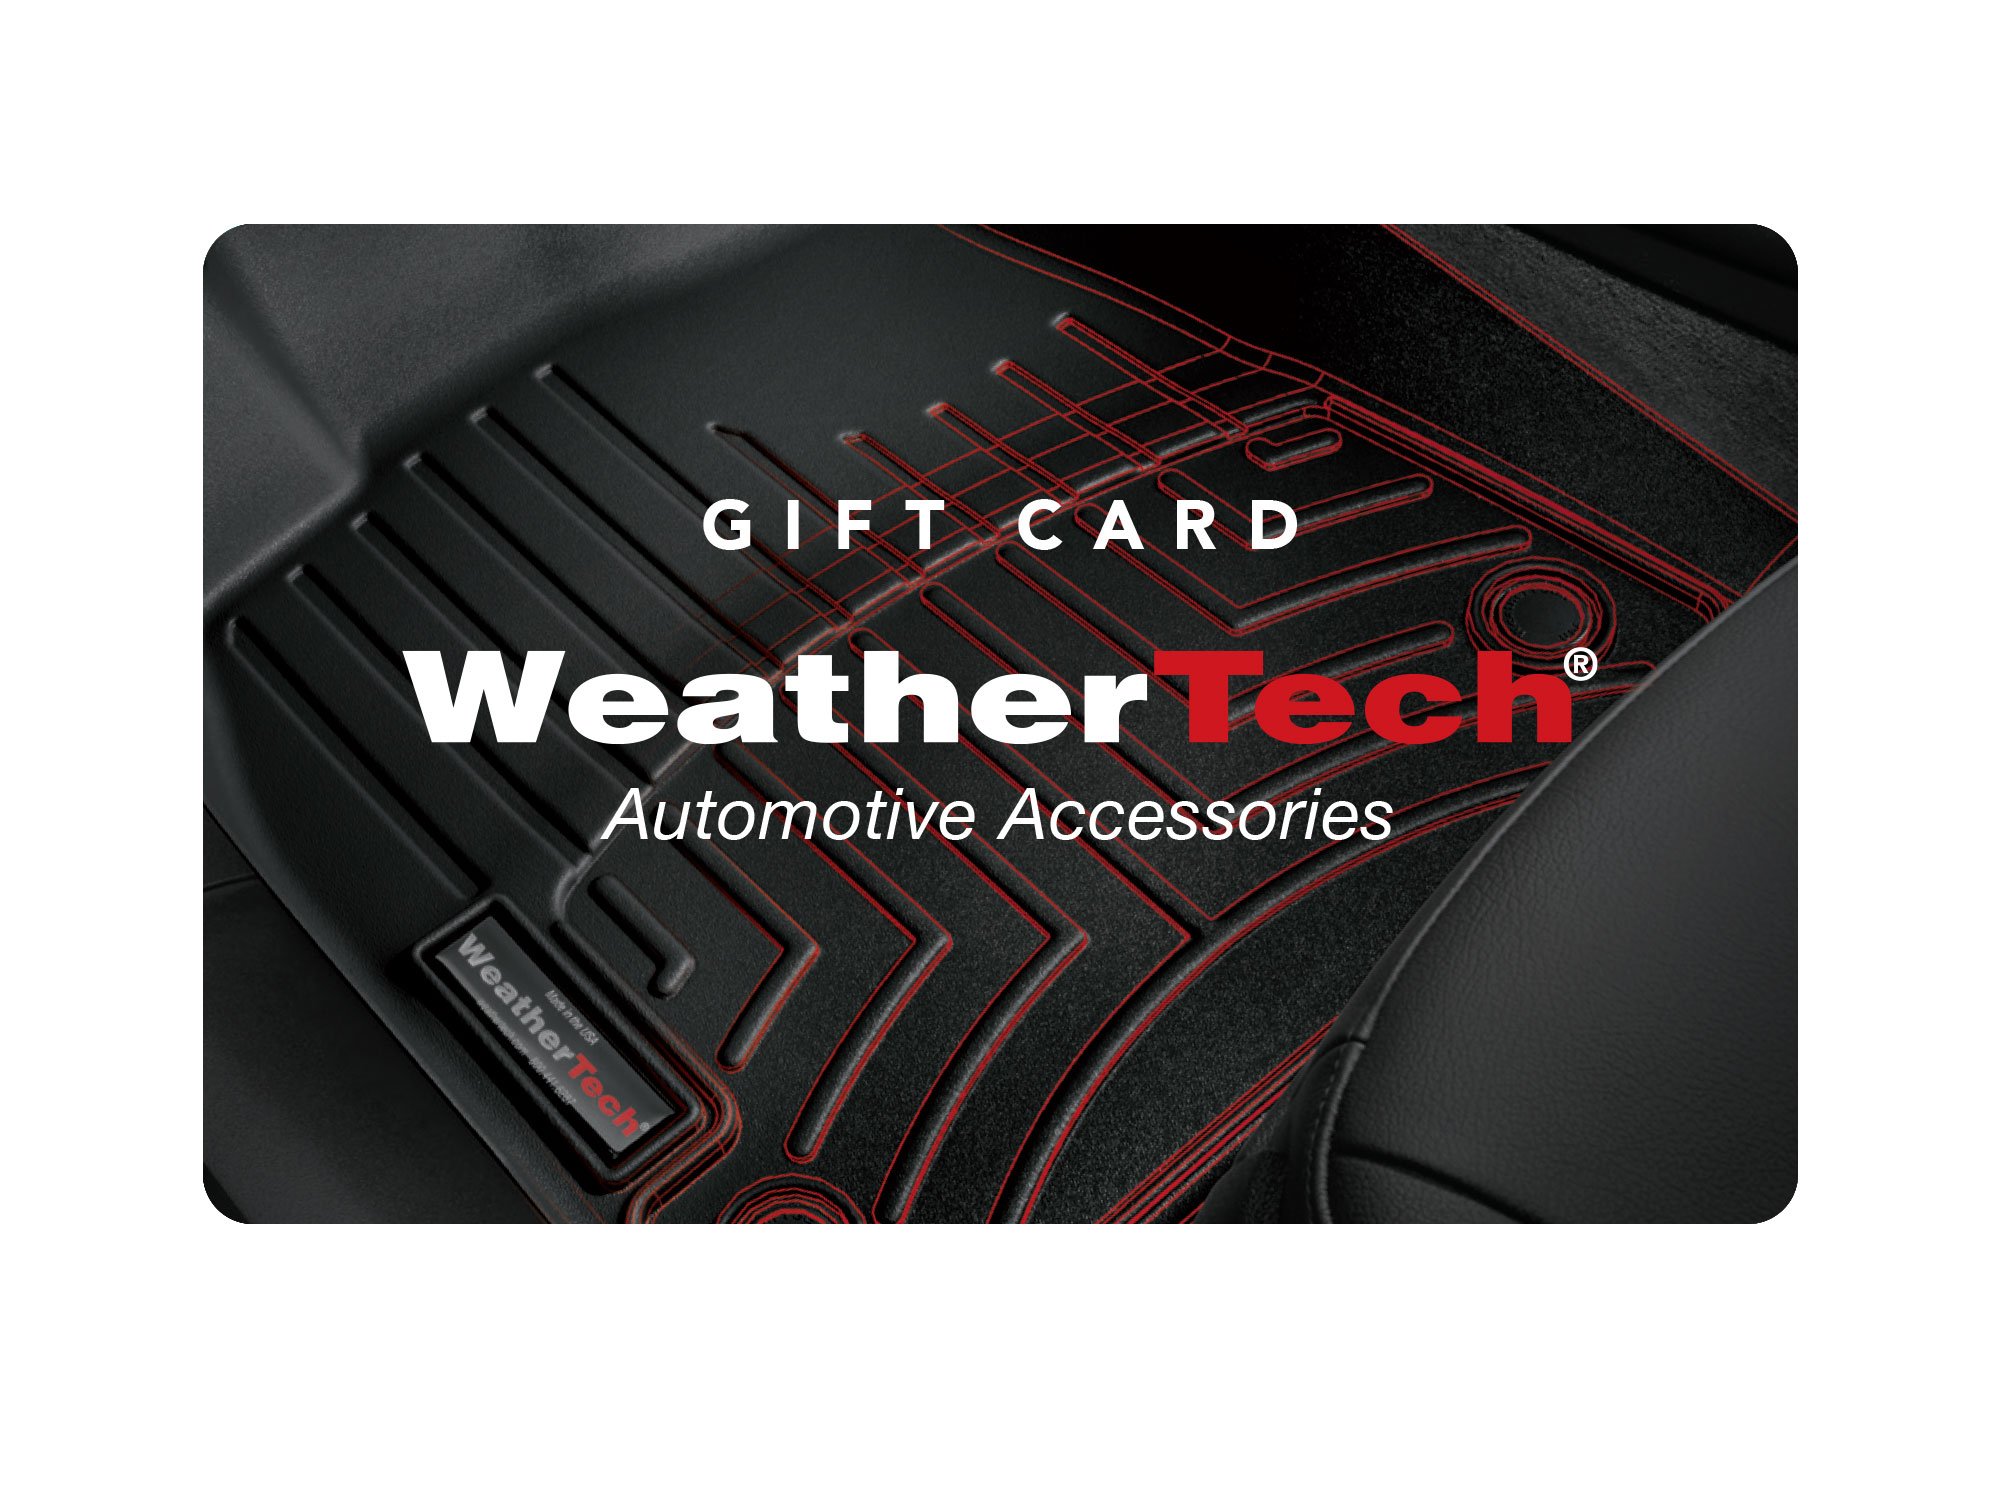 Weathertech $250 eGift Card US 186.91 usd